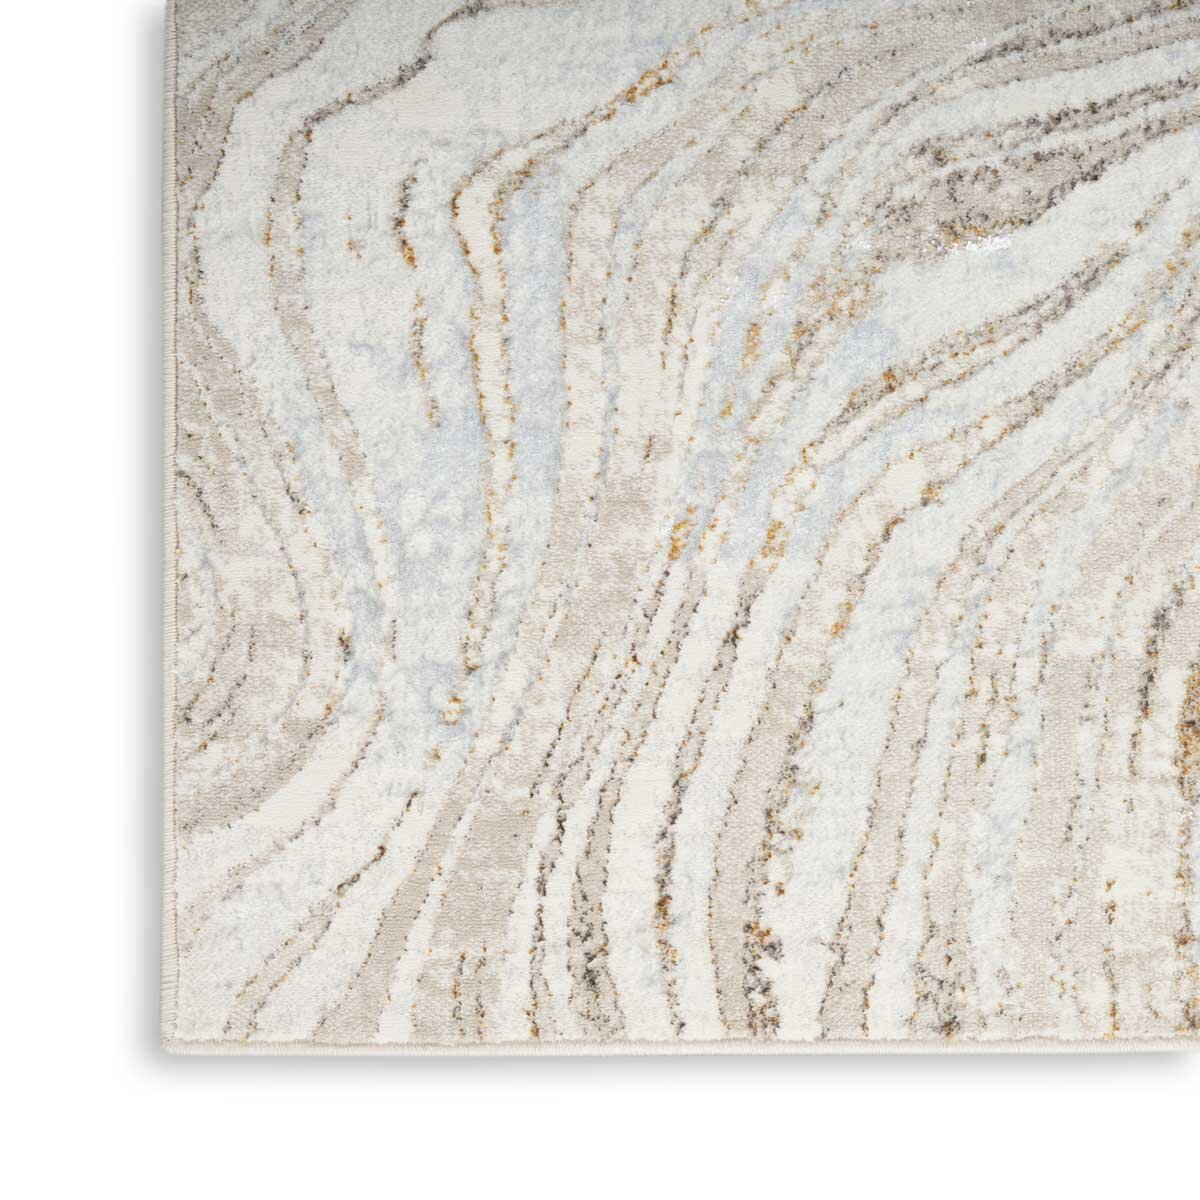 Glitz Gold Marble Runner, 69 x 229 cm